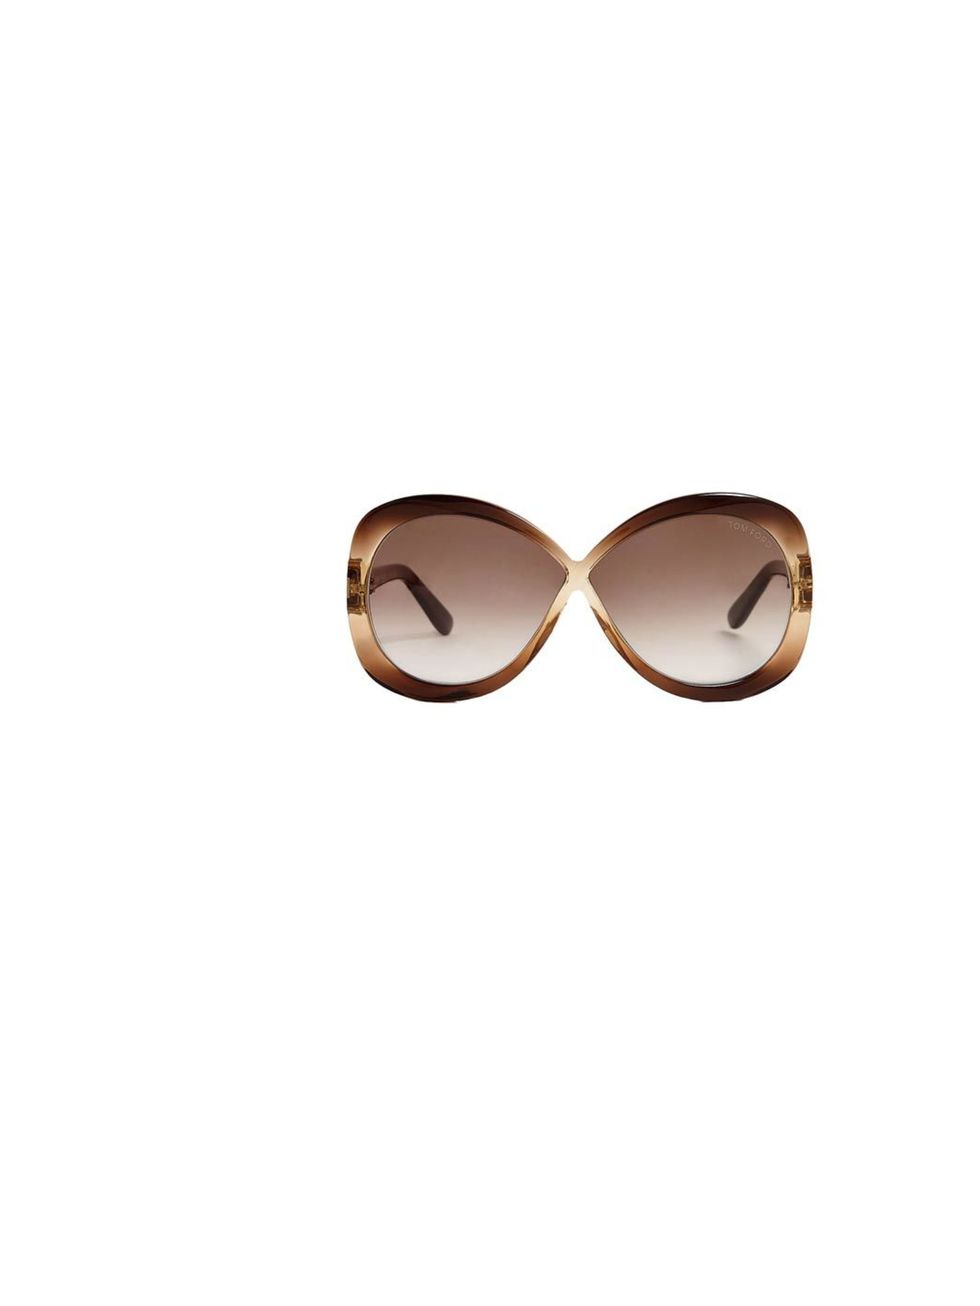 <p>Tom Ford 'Margot' sunglasses, £270, at <a href="http://www.my-wardrobe.com/tom-ford/margot-tf226-cross-over-bow-sunglasses-572121">my-wardrobe.com</a></p>